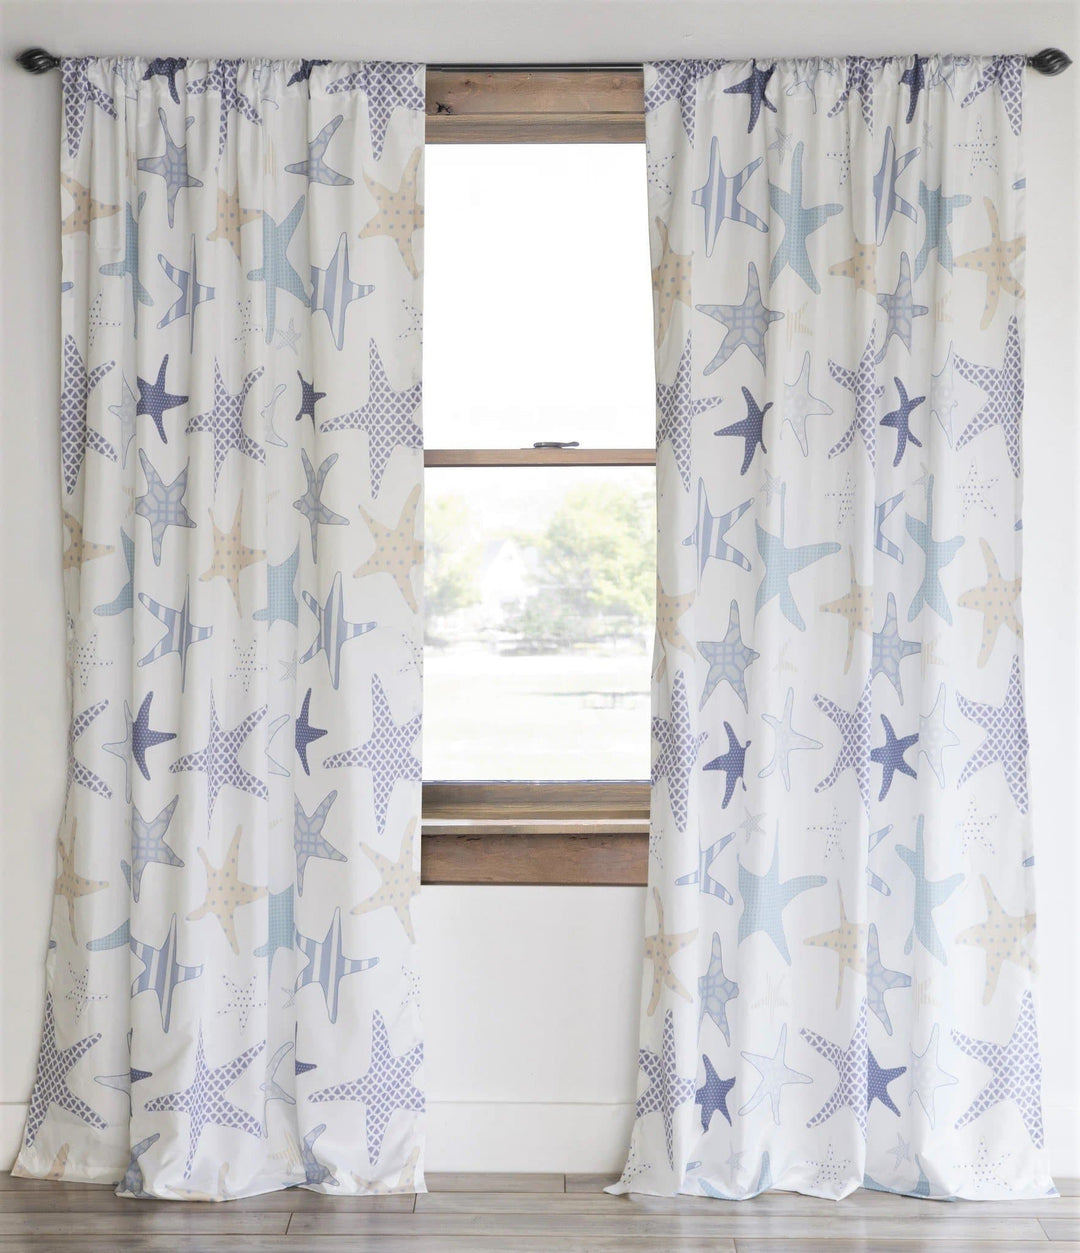 Printed star fish over white cotton fabric curtain set. The Coastal Compass Home Decor